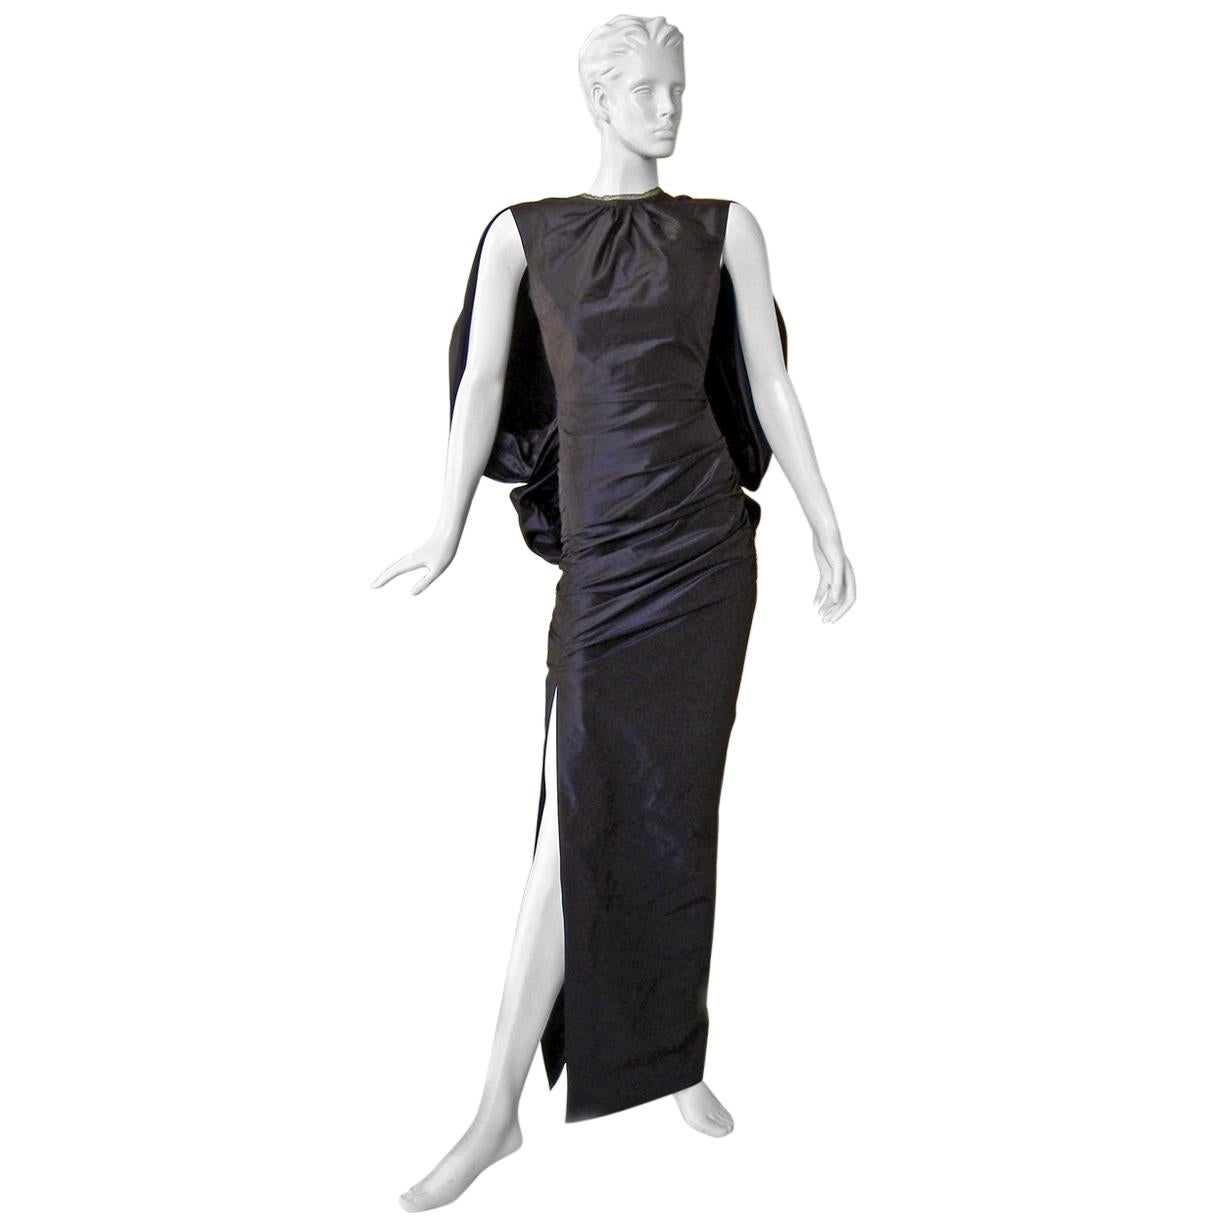 Tom Ford Dramatic High Fashion Parisian Inspired Runway Gown    New!  Killer!